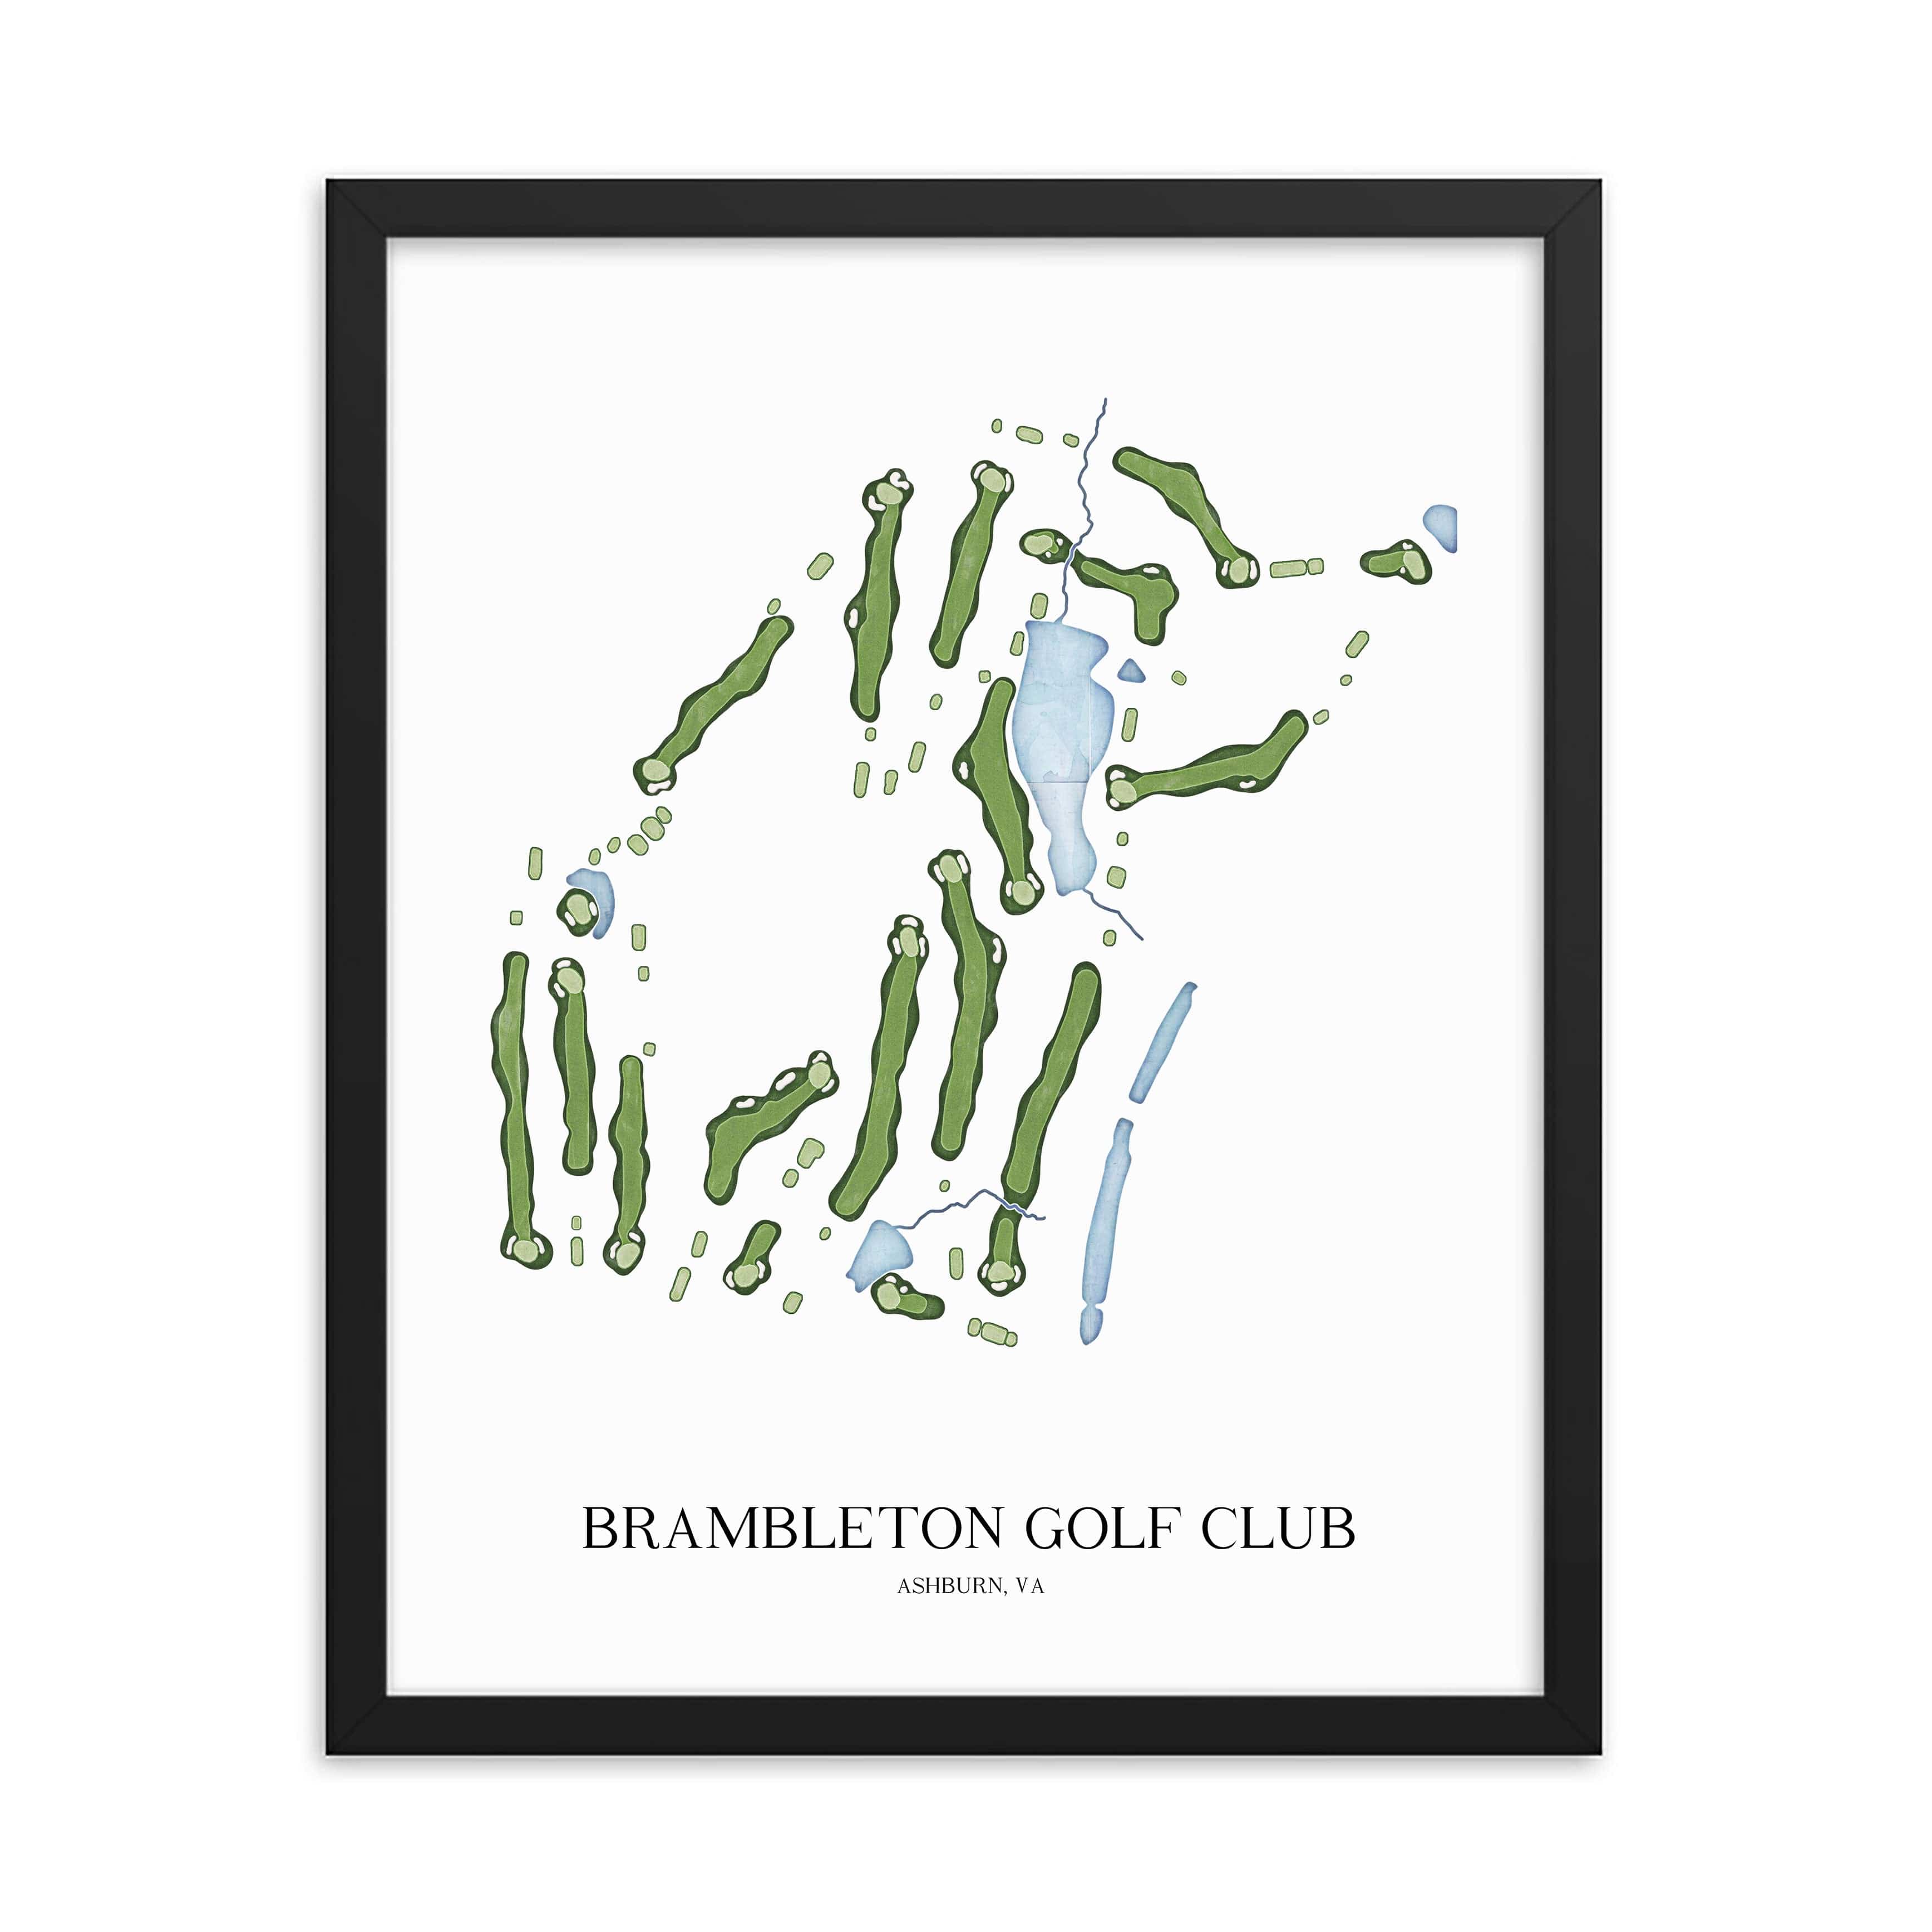 The 19th Hole Golf Shop - Golf Course Prints -  Brambleton Golf Club Golf Course Map